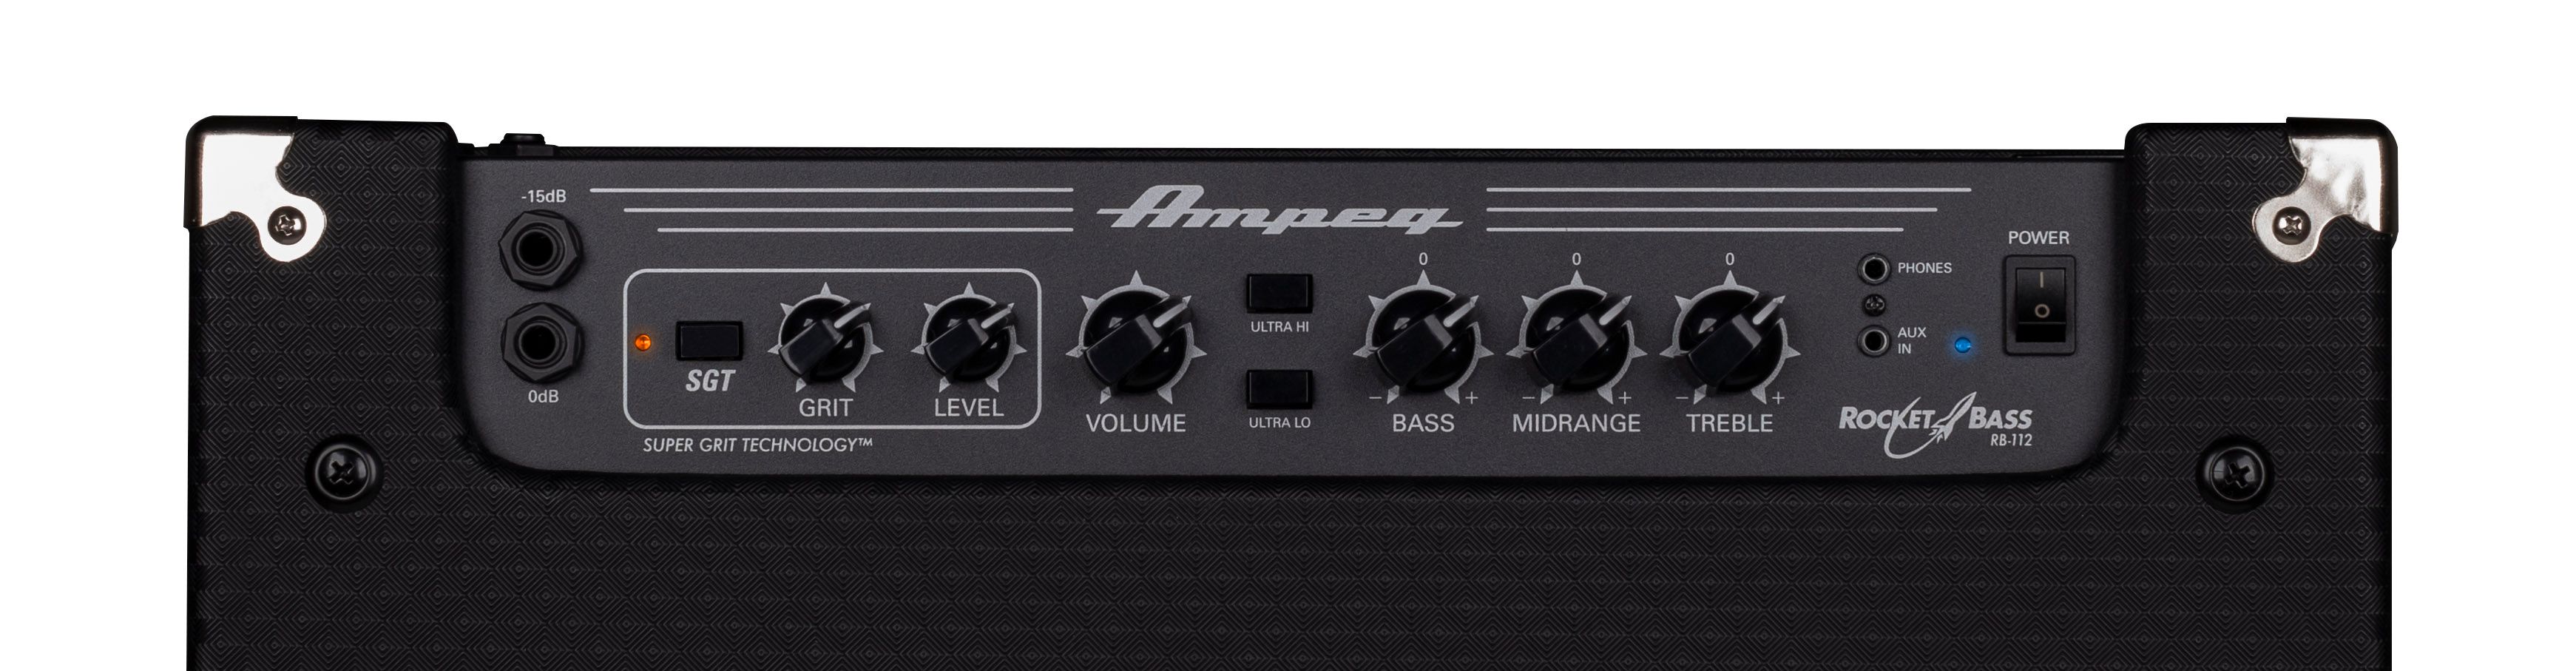 Ampeg Rocket Bass Combo 100w 1x12 - Combo amplificador para bajo - Variation 2